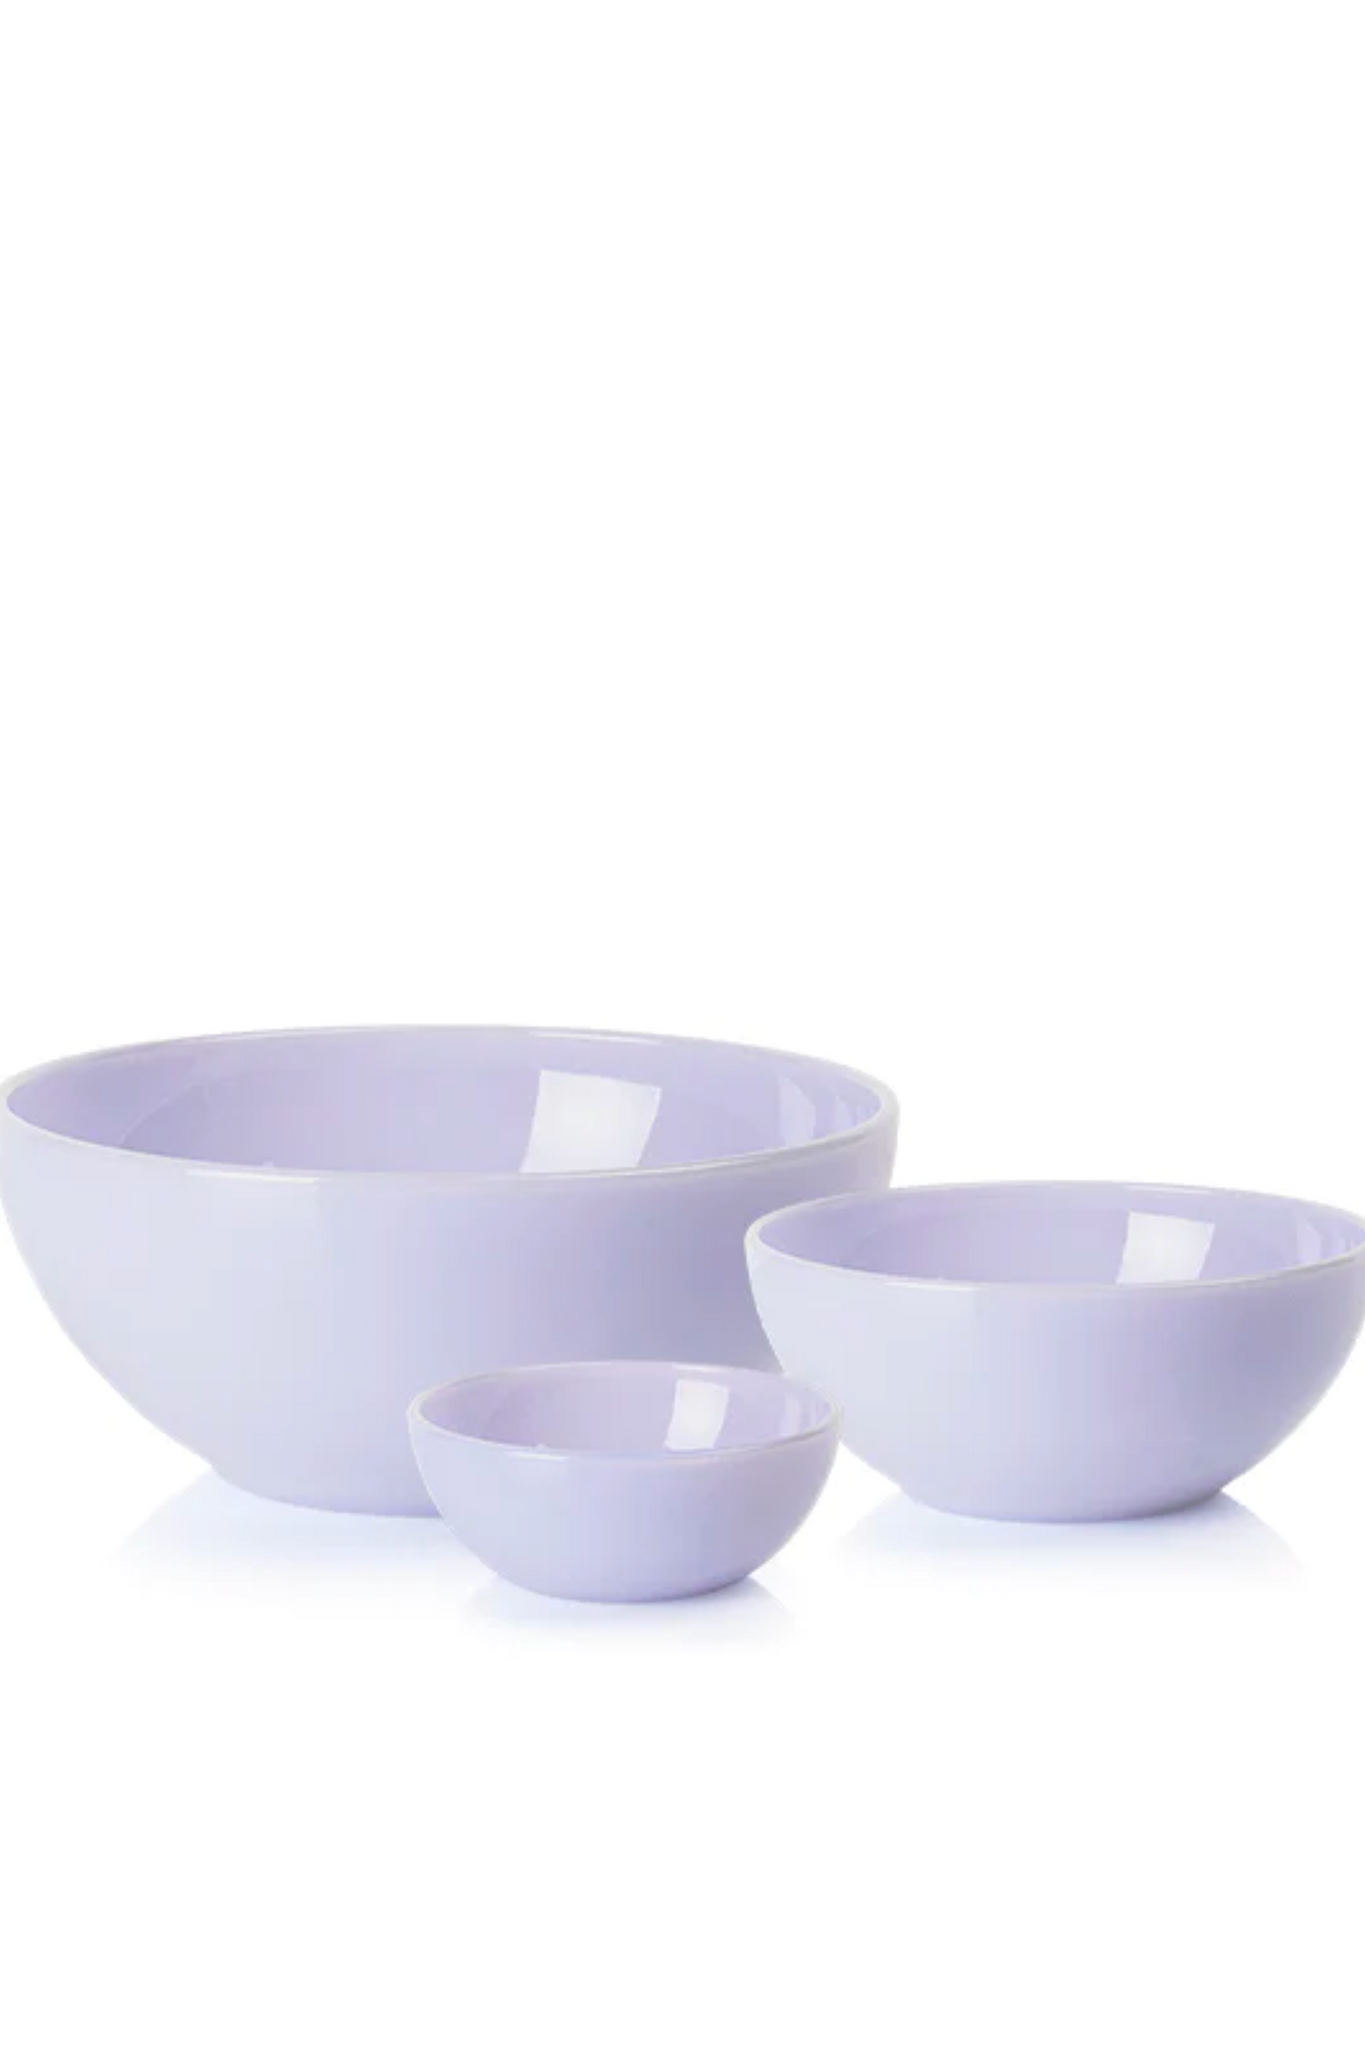 Lucie Kaas MILK - Small Bowl, Lavender